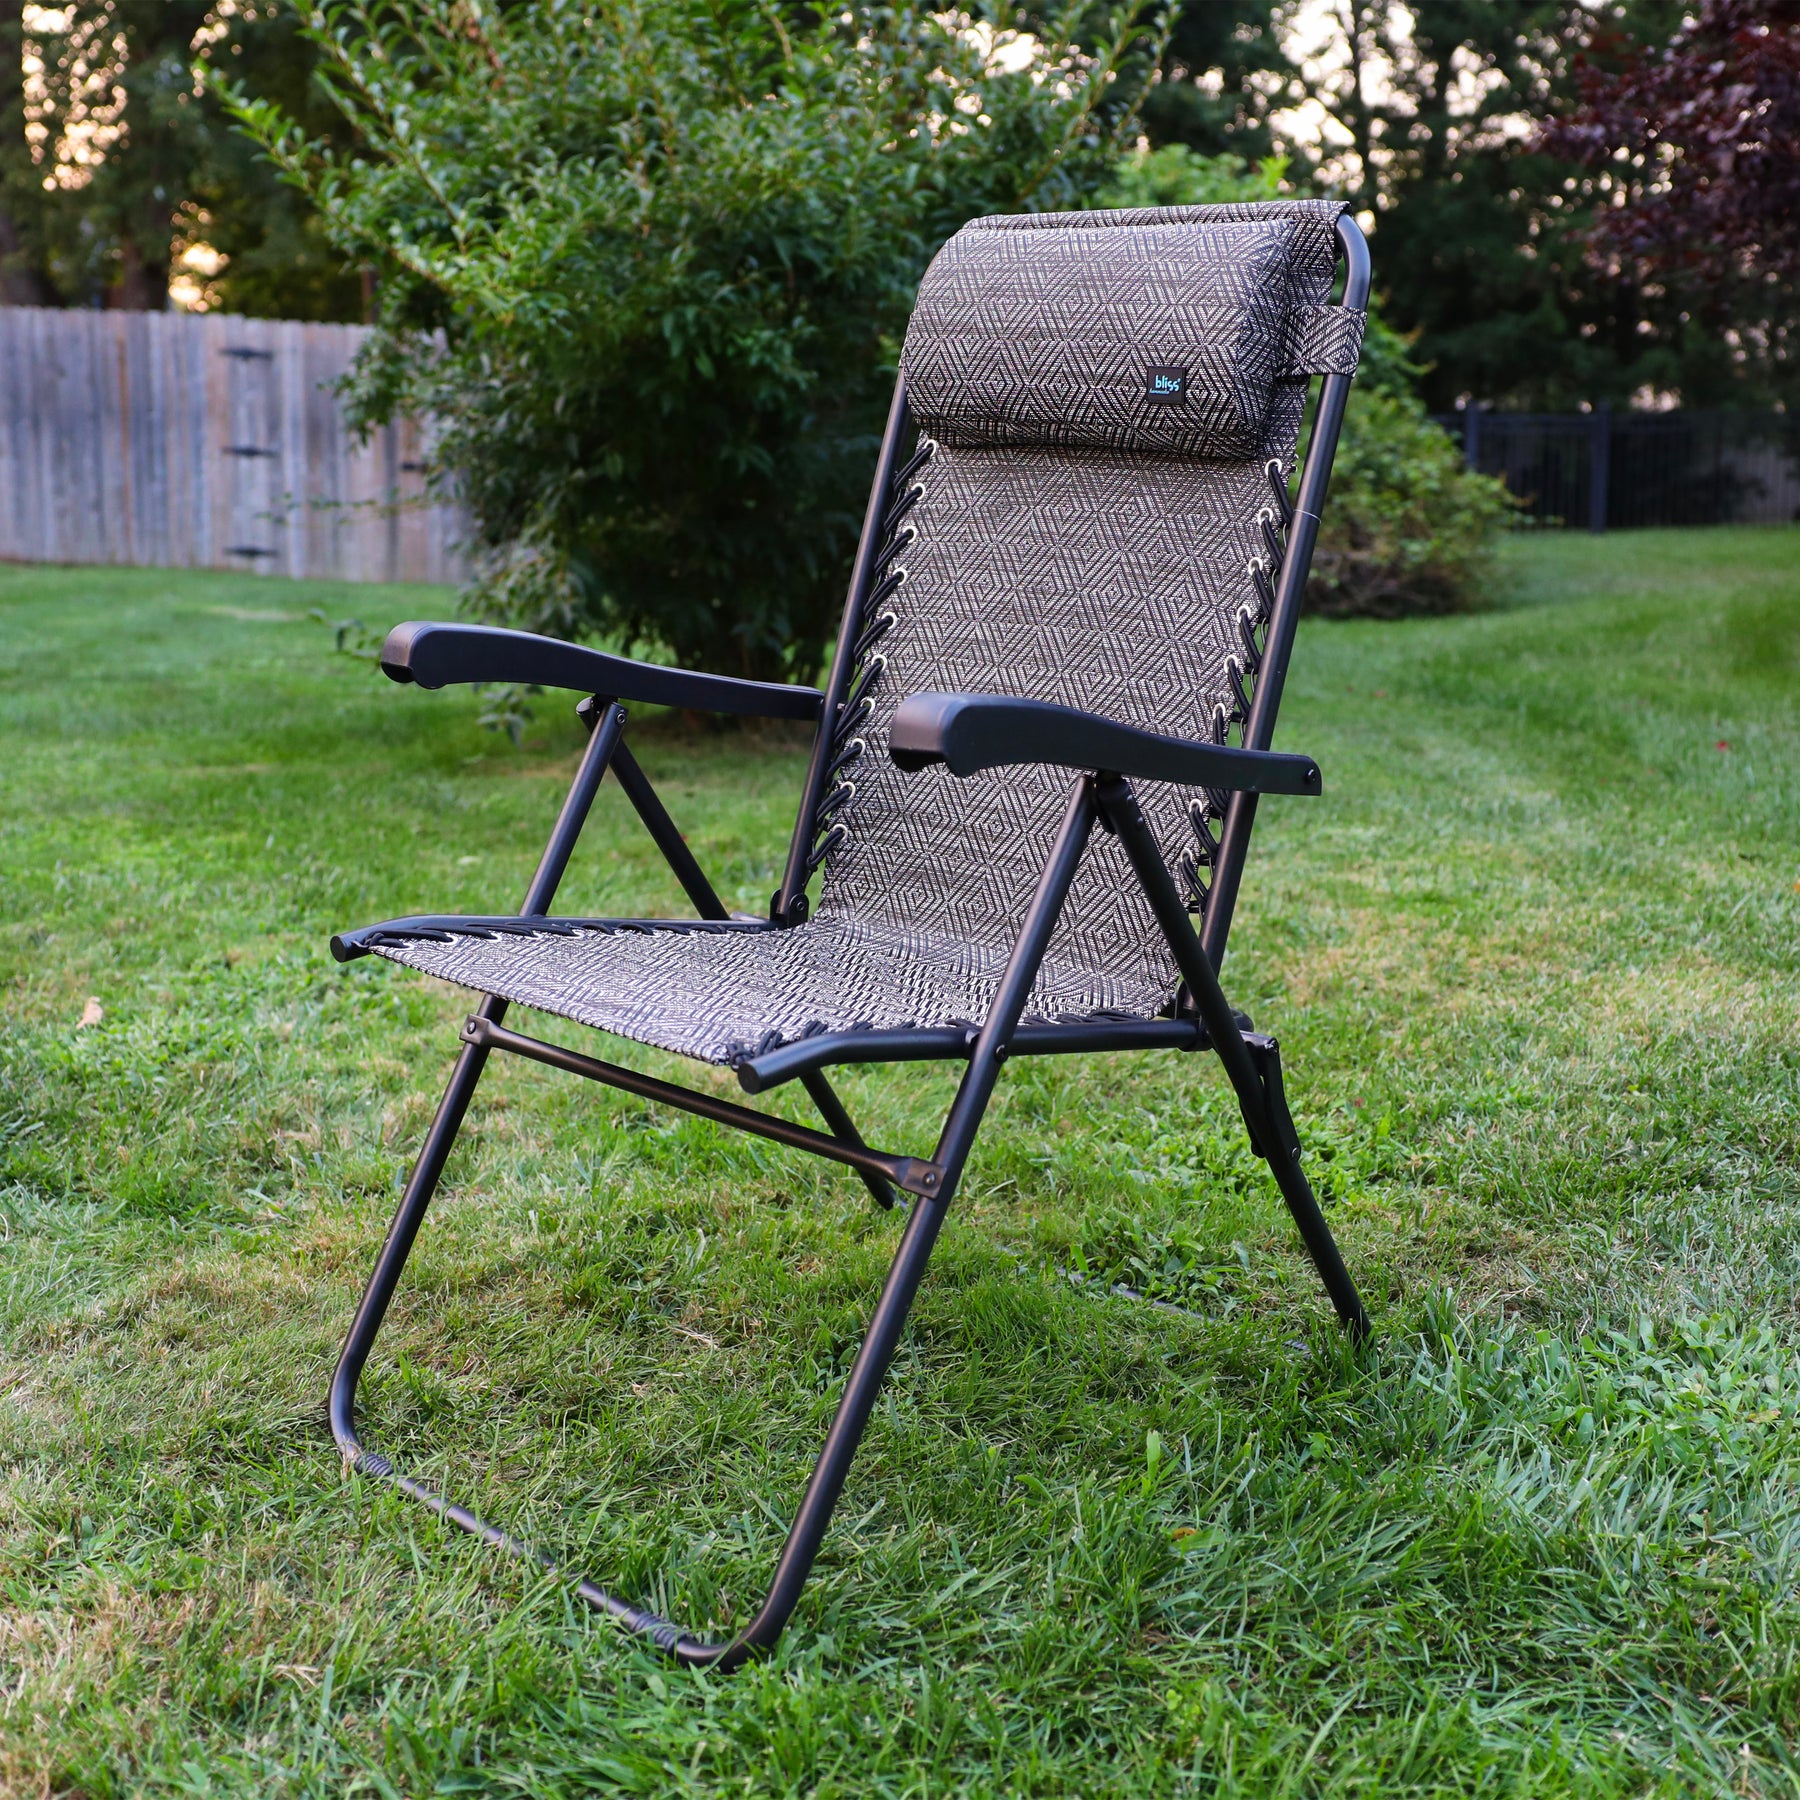 26-inch Reclining Diamond Jacquard Sling Chair on a lawn.